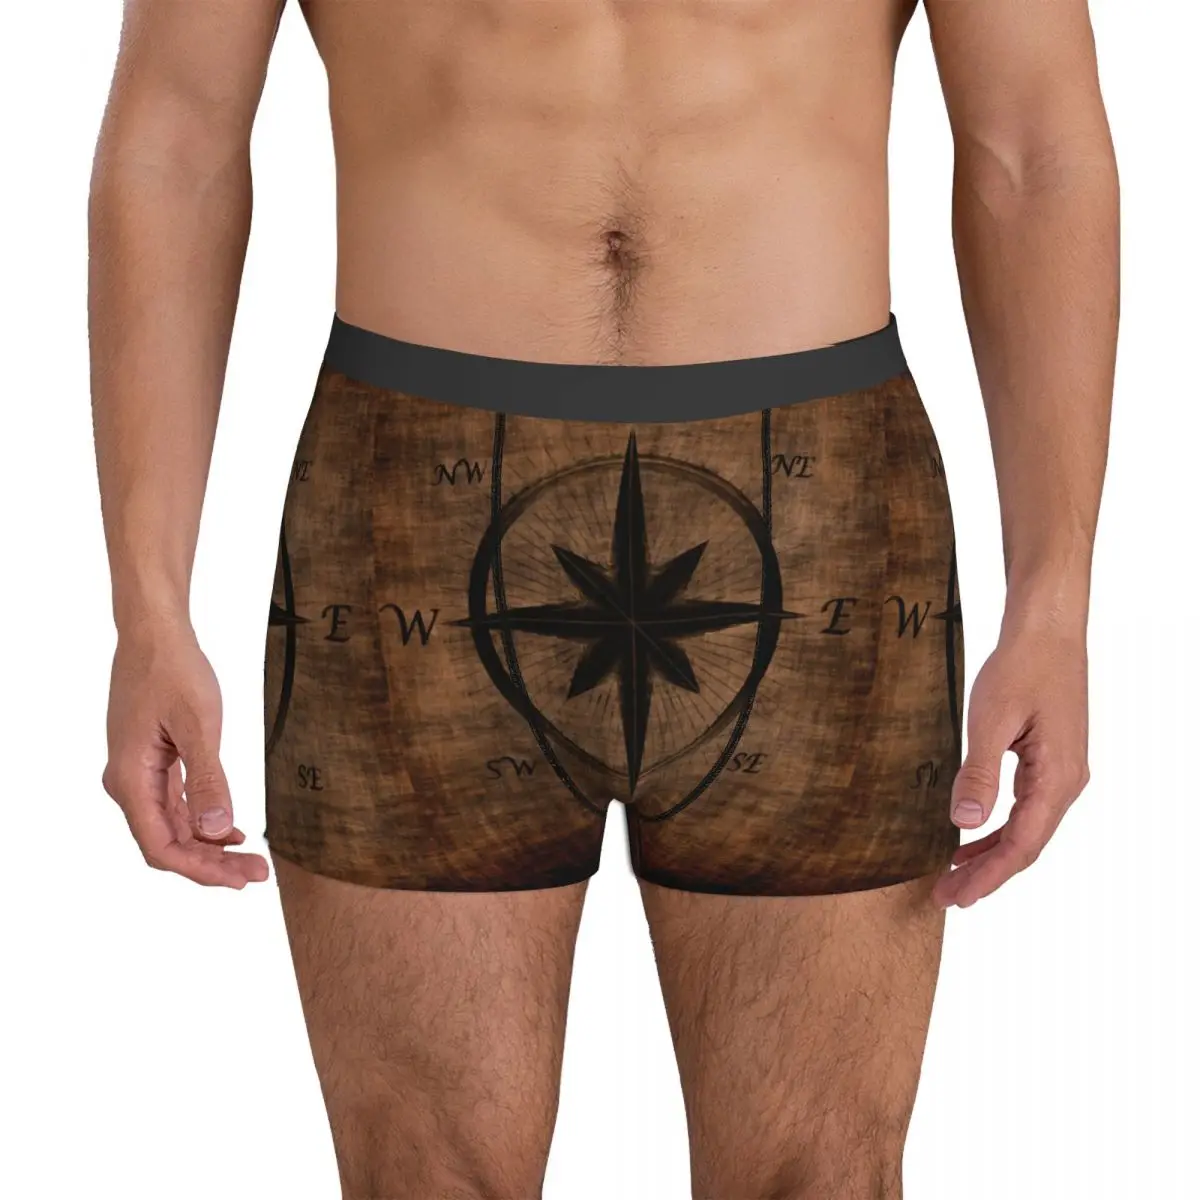 Nostalgic Old Compass Rose Underwear Navigation Elastic Underpants Printed Boxer Brief Pouch Men's Plus Size Boxershorts